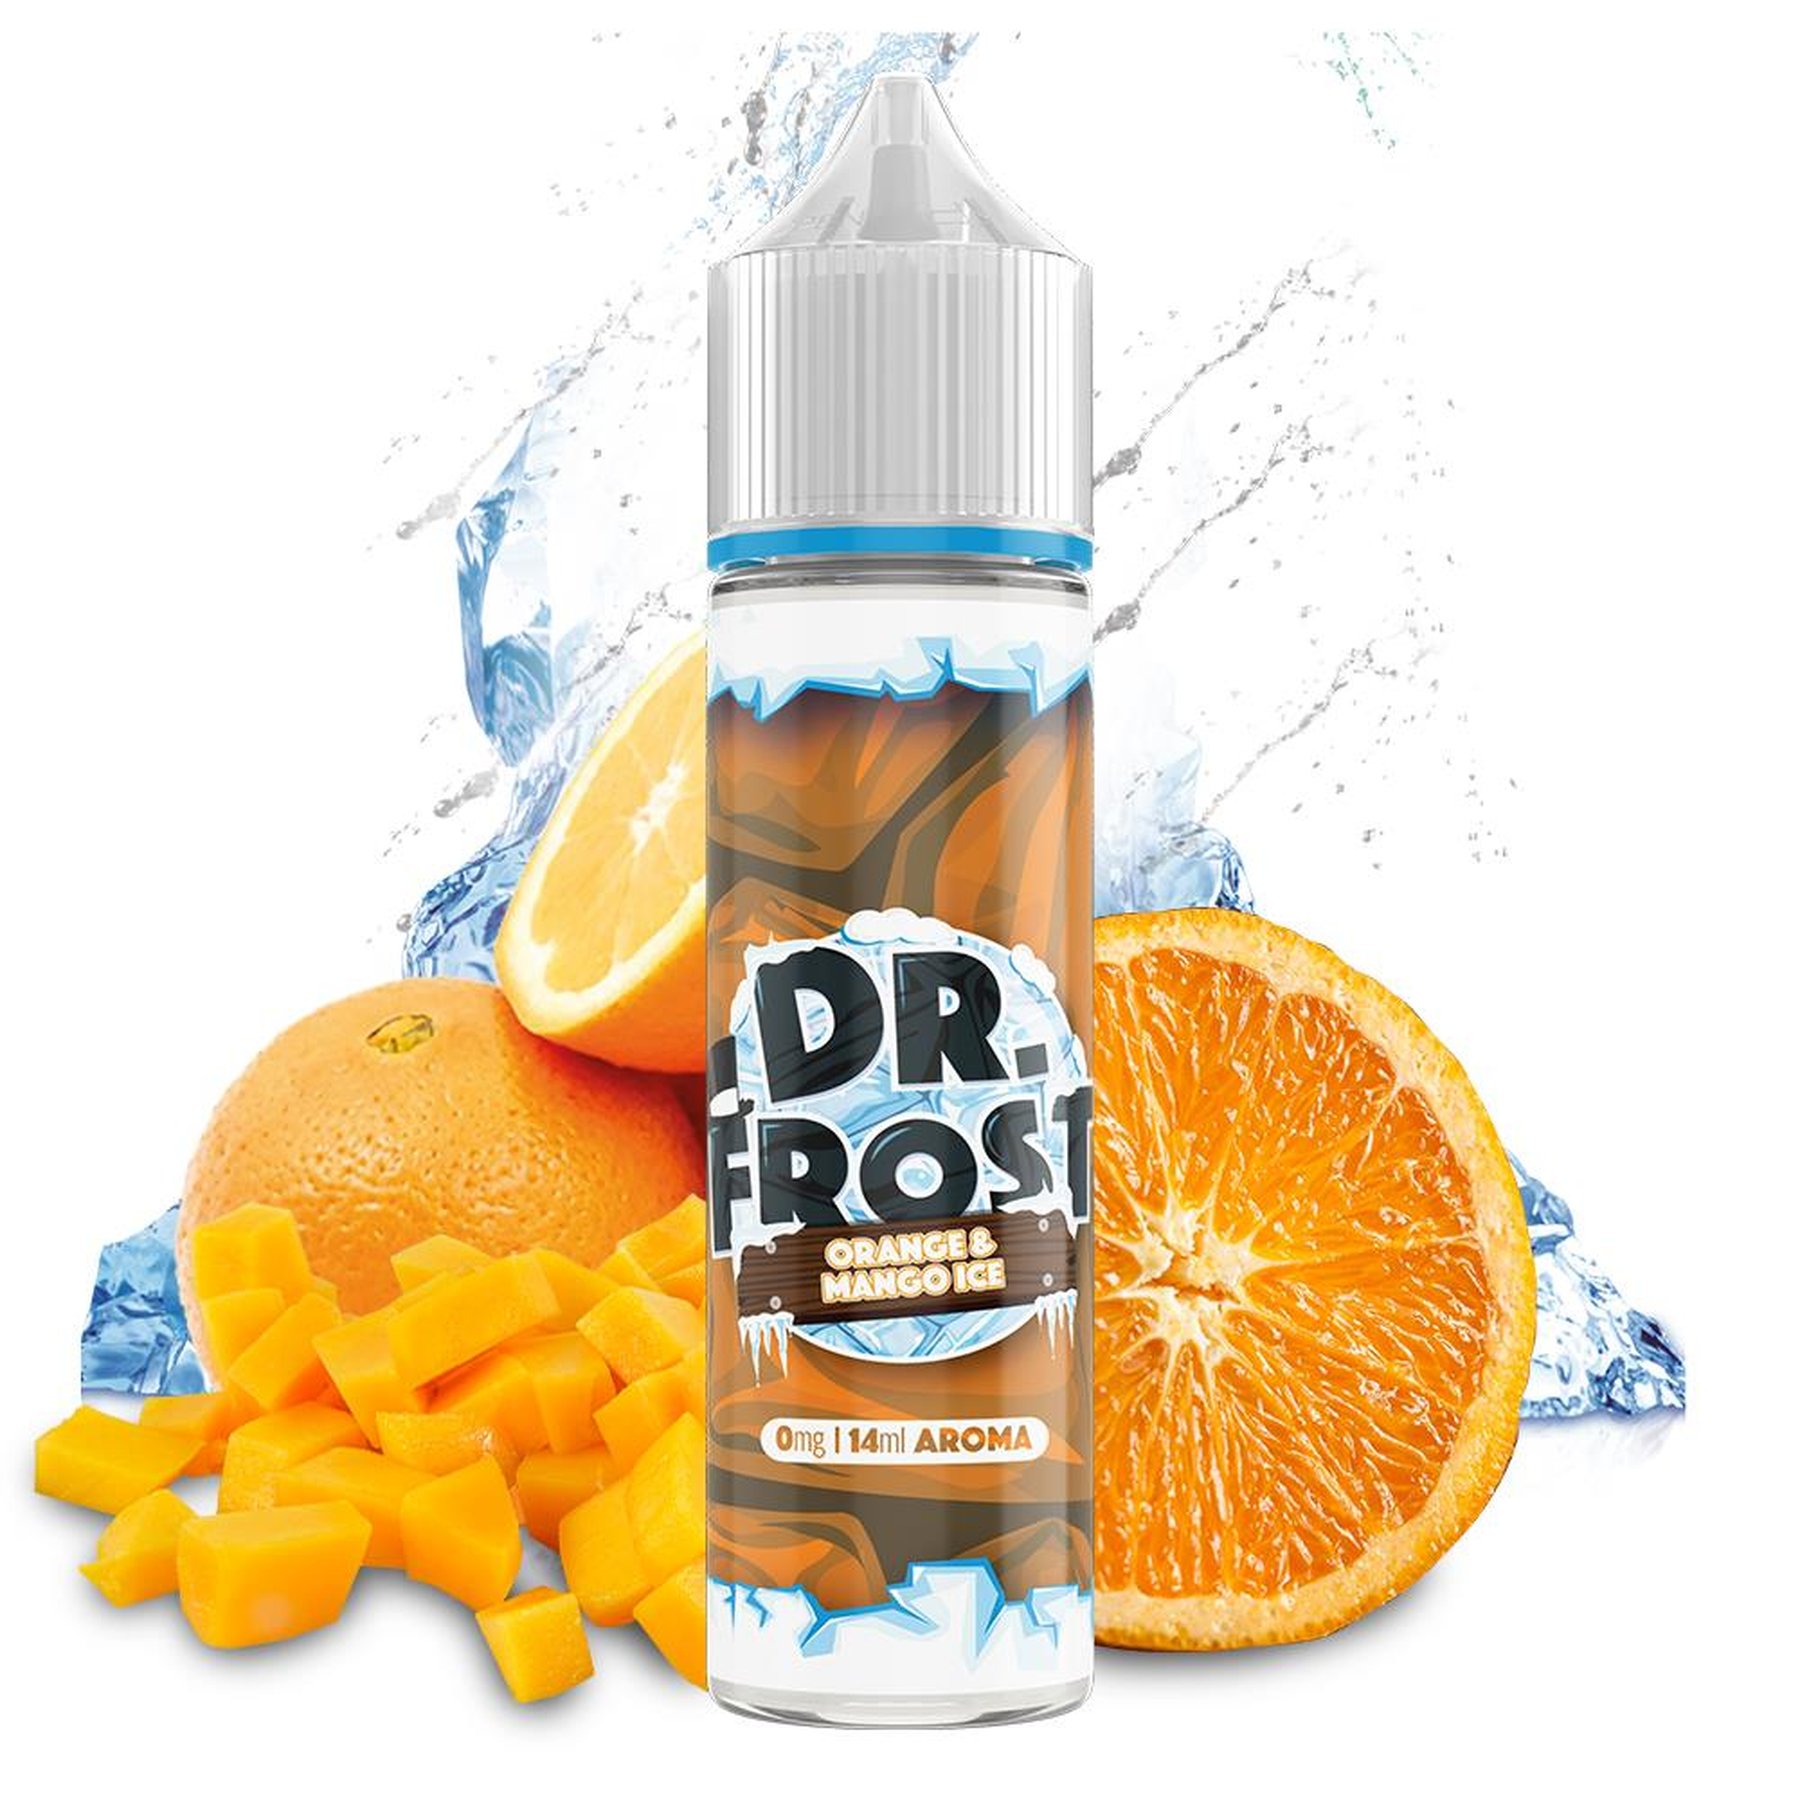 Dr. Frost Orange Mango Ice Longfill 14ml